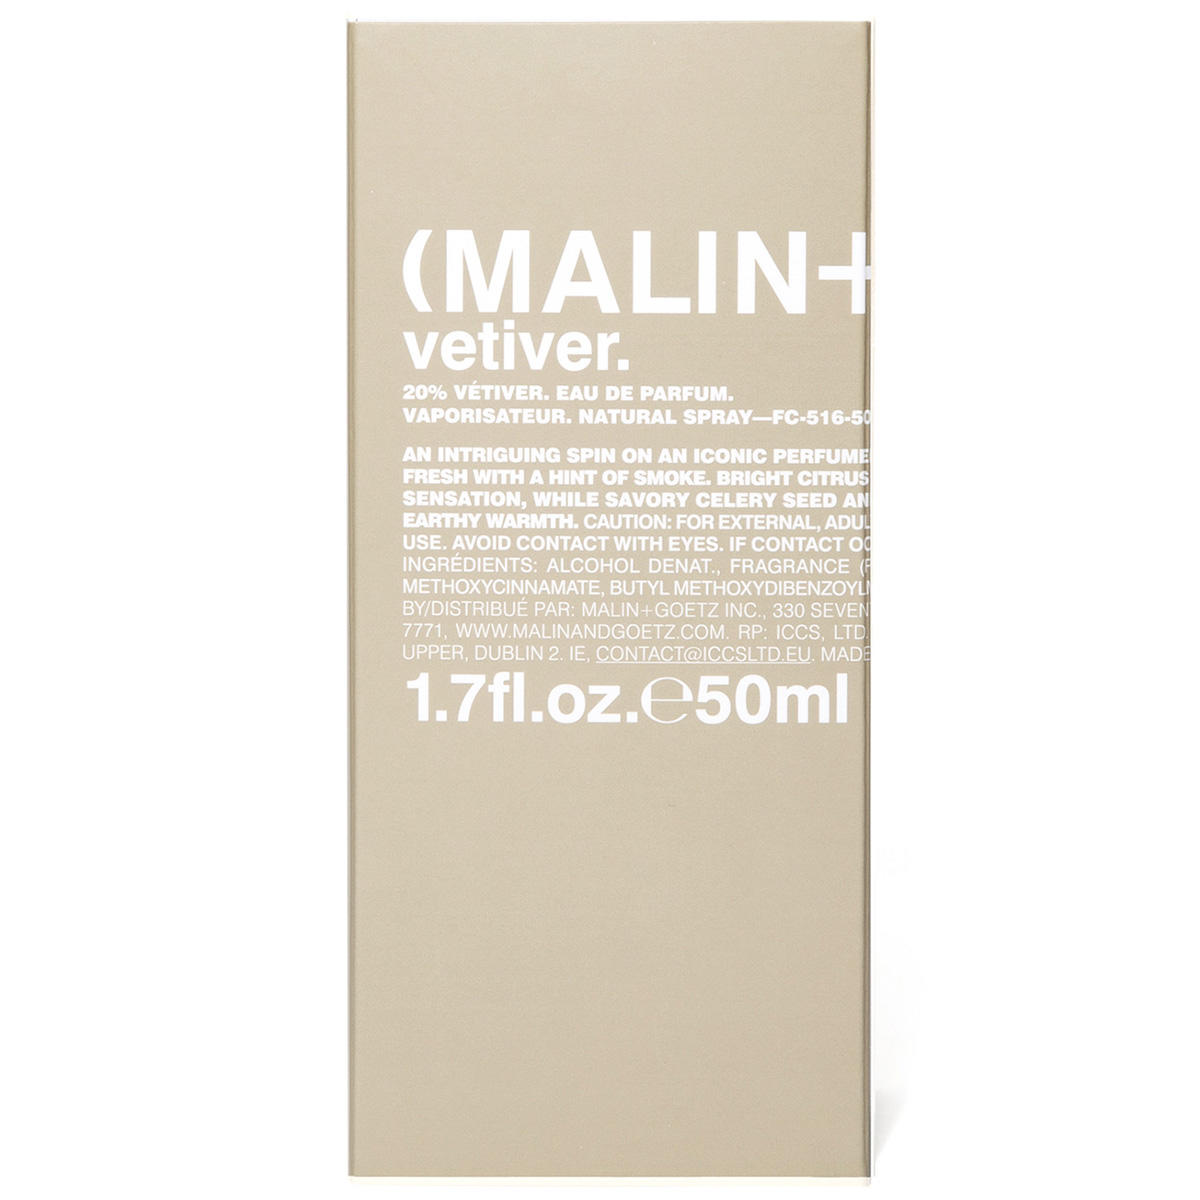 (MALIN+GOETZ) Vetiver Eau De Parfum 50 ml - 3